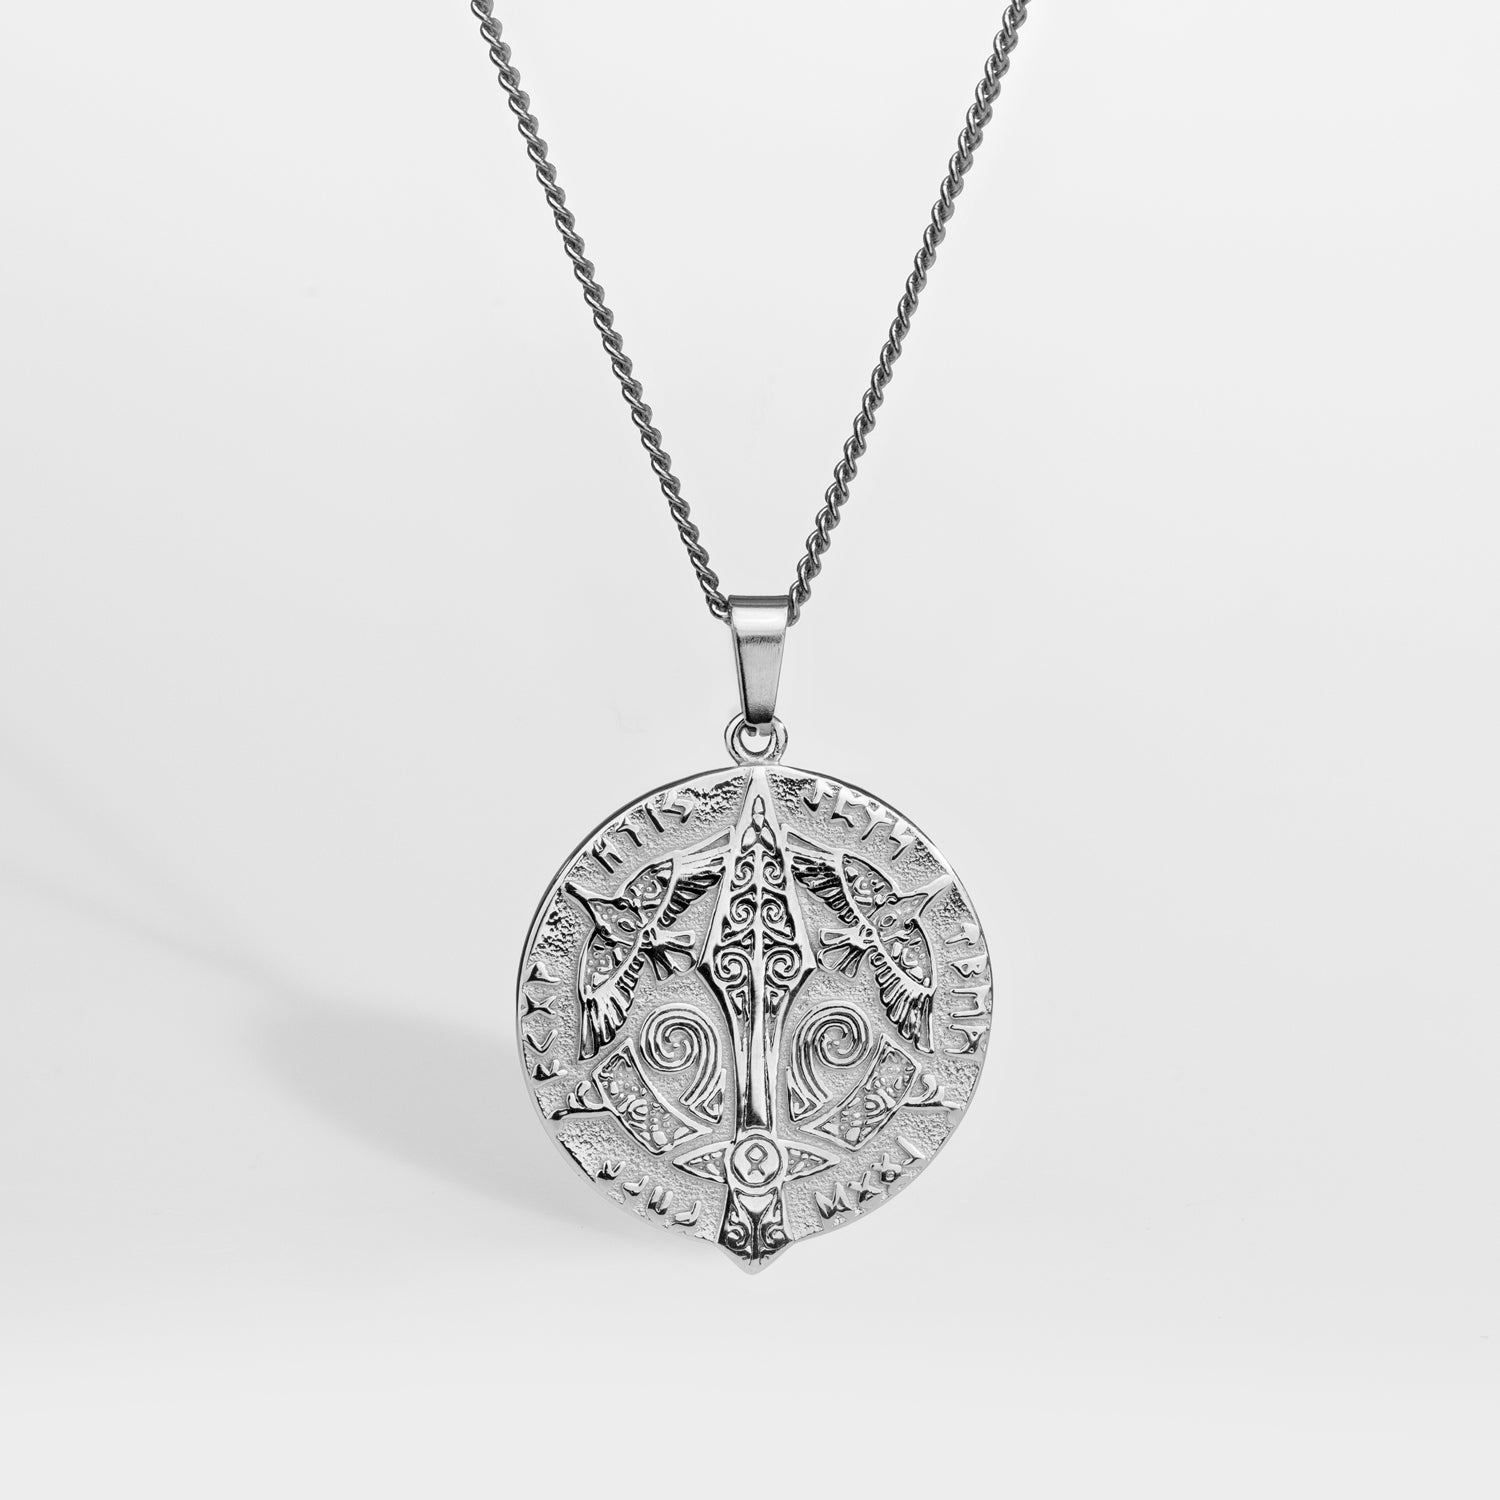 NL Gungnir necklace - Silver-toned